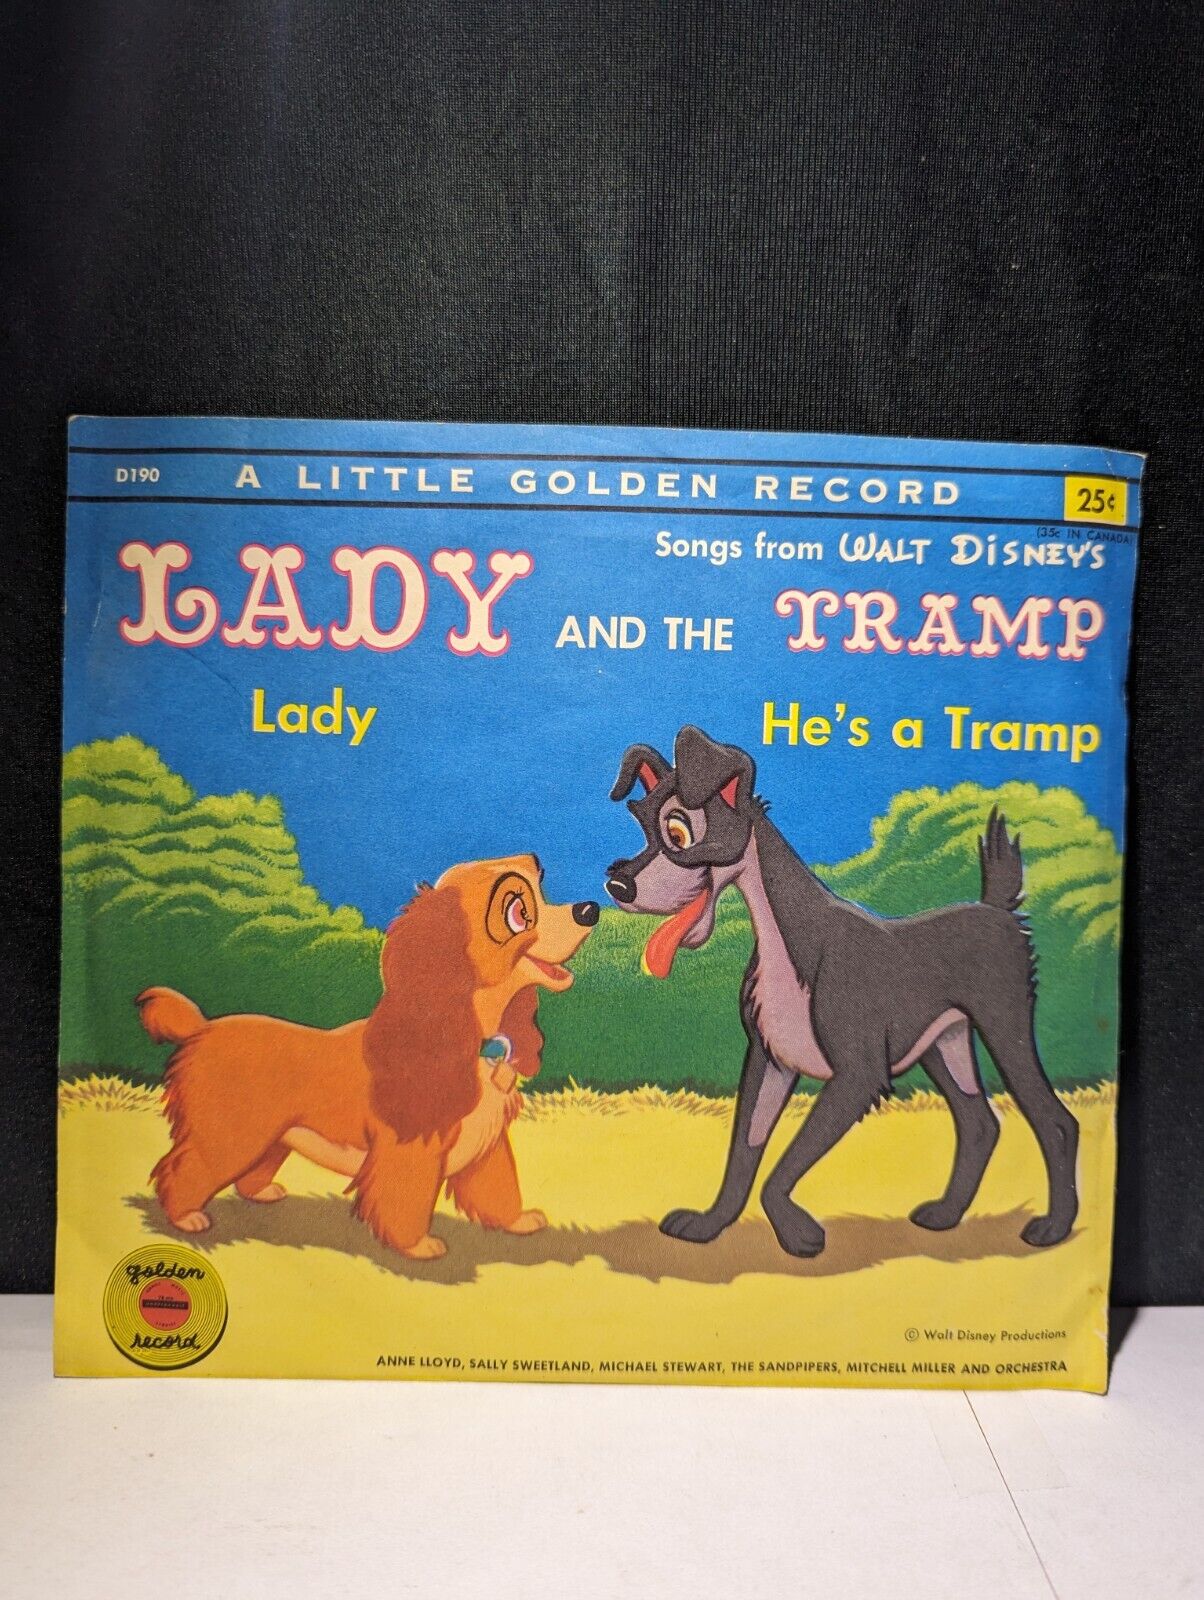 VINTAGE 45 RPM VINYL RECORD LADY AND THE TRAMP LITTLE GOLDEN WALT DISNEY